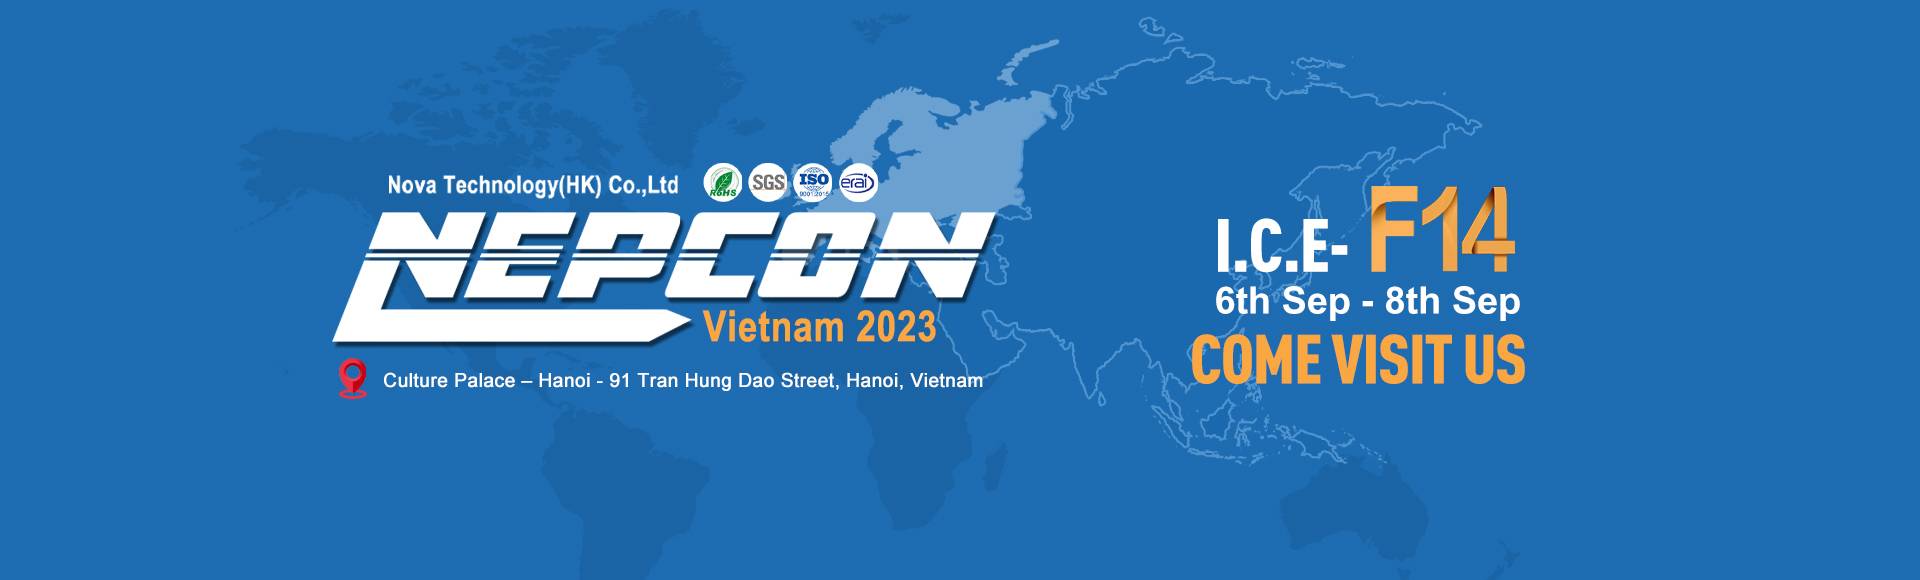 NEPCON Vietnam 2023 Invitation Letter